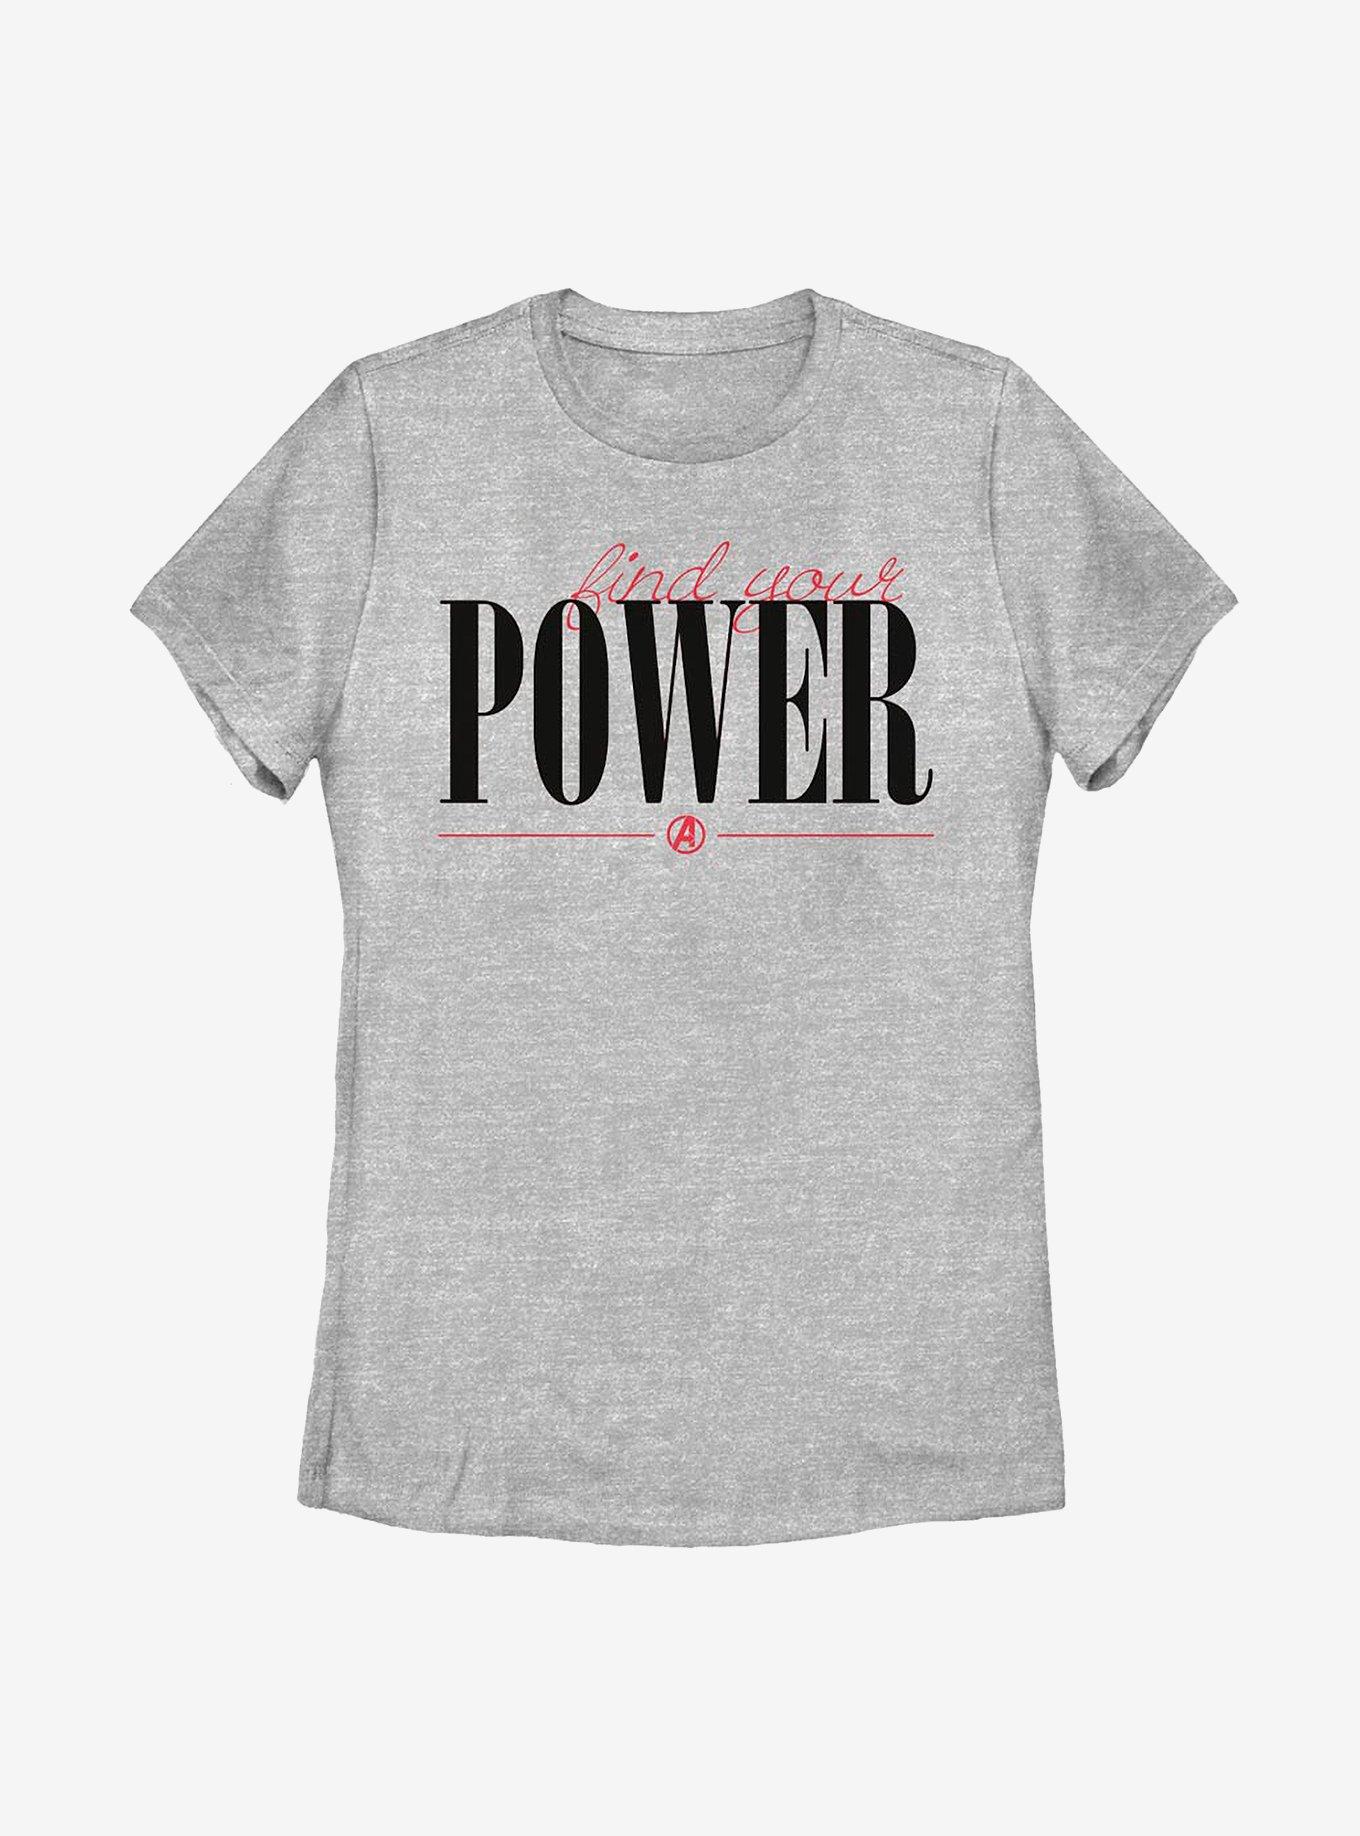 Marvel Avengers Power Script Womens T-Shirt, ATH HTR, hi-res